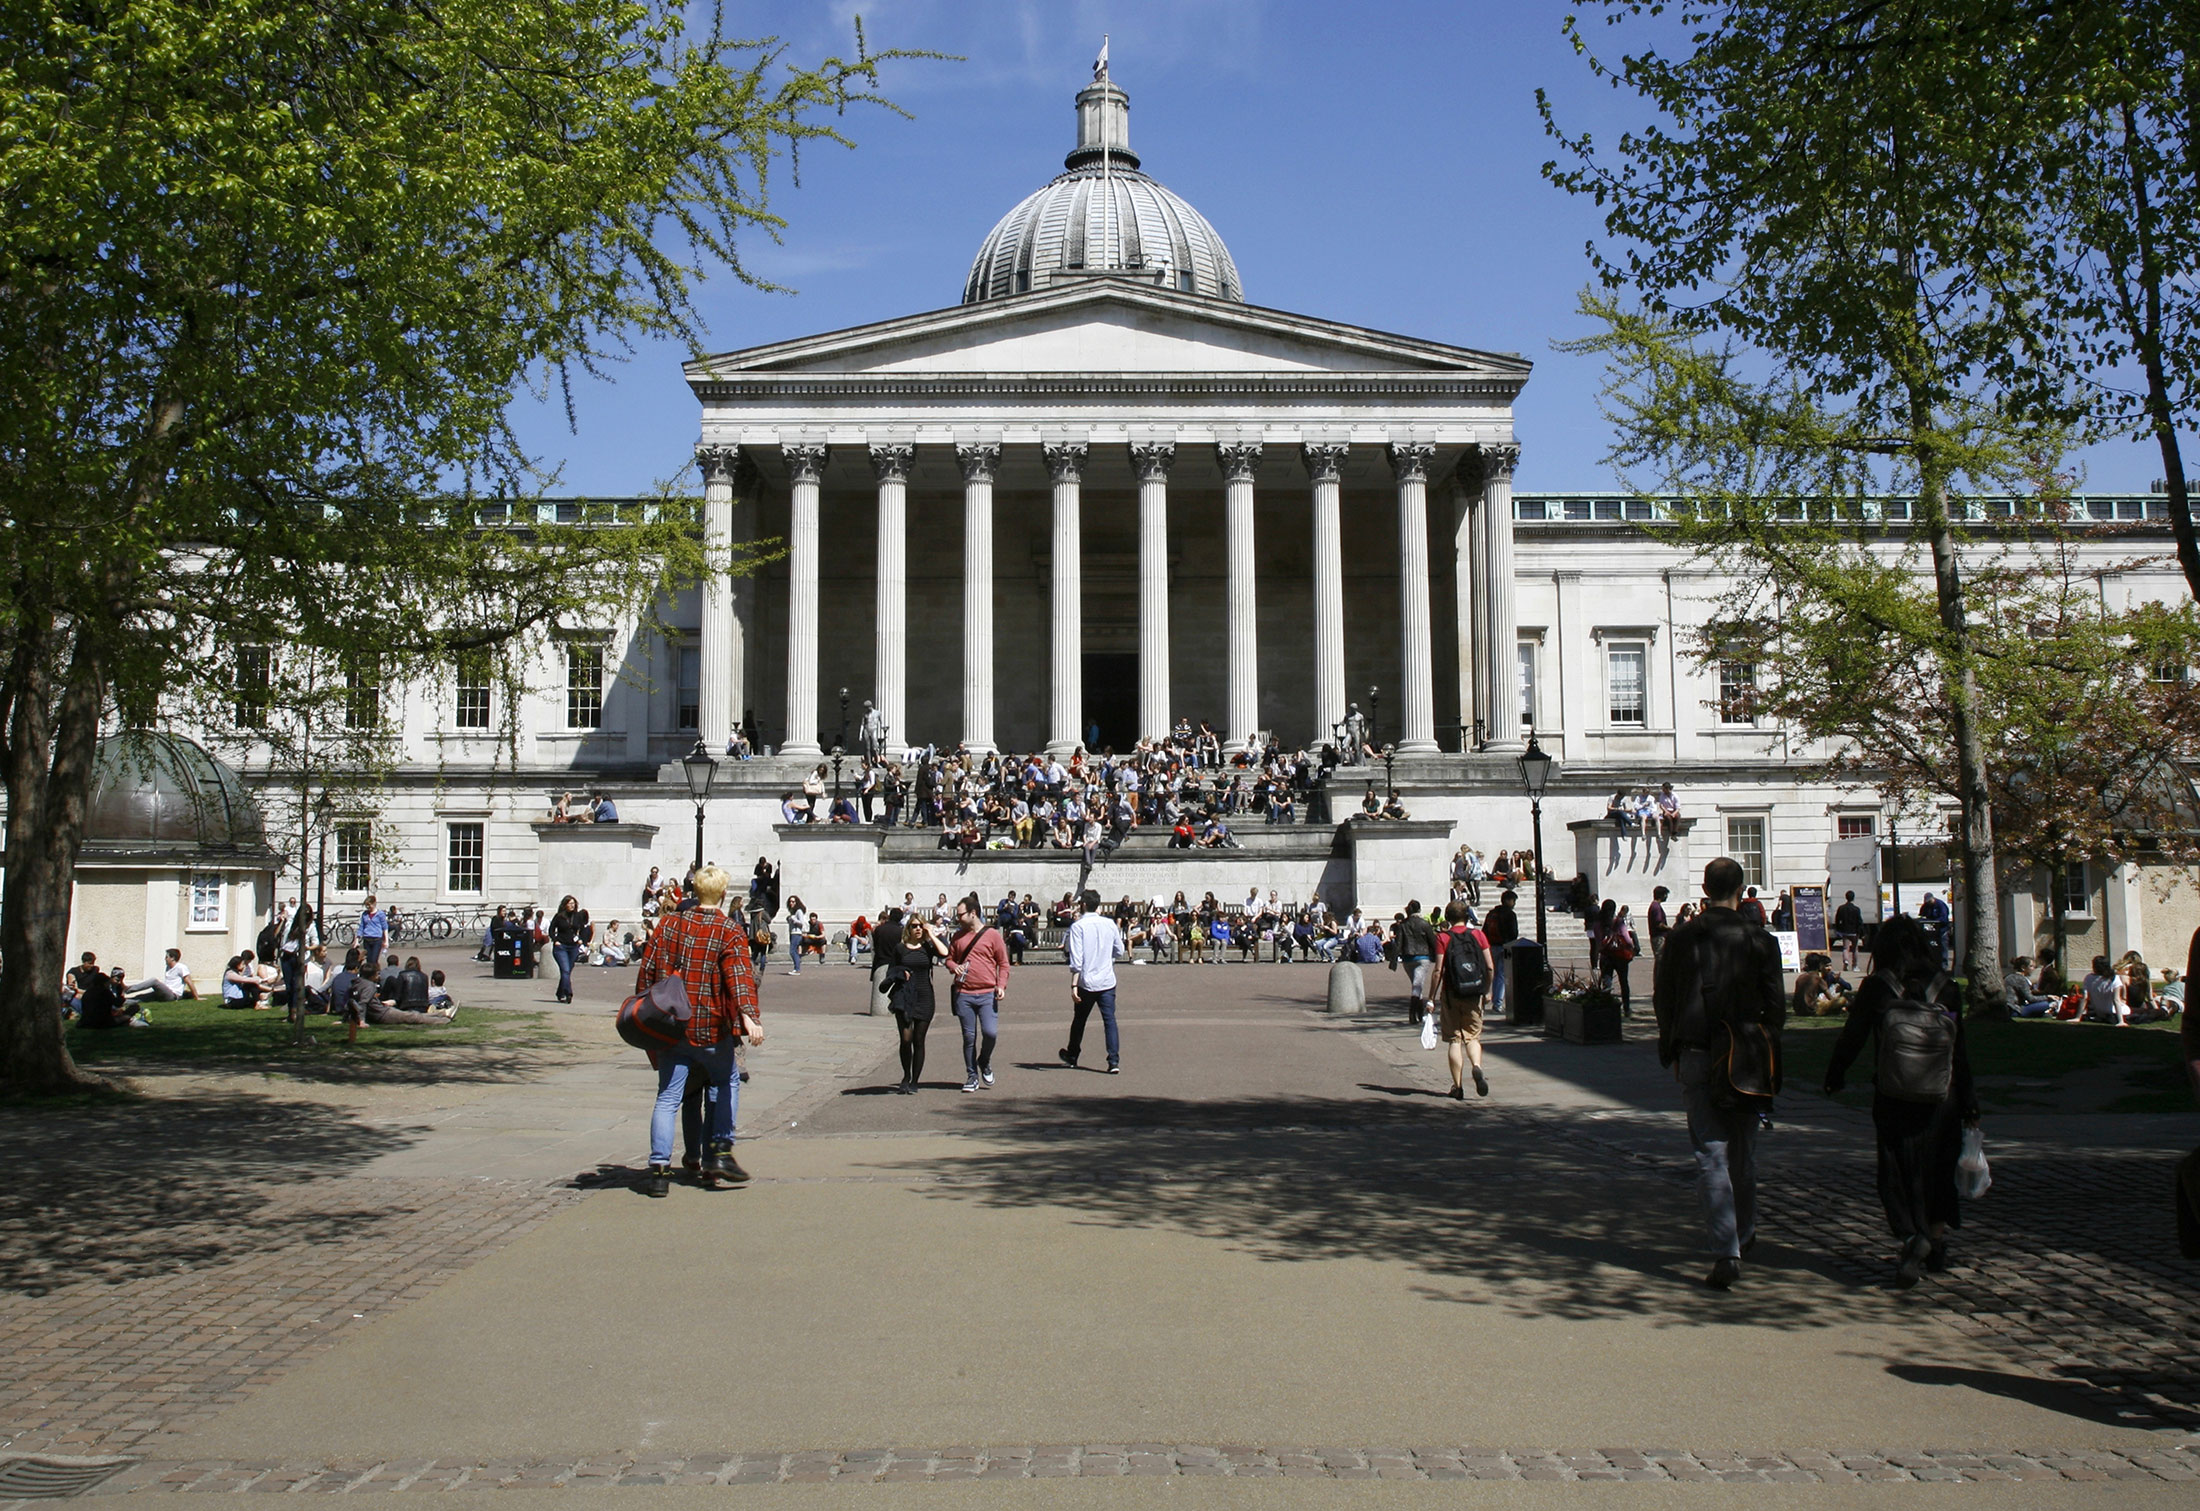 city university of london global ranking